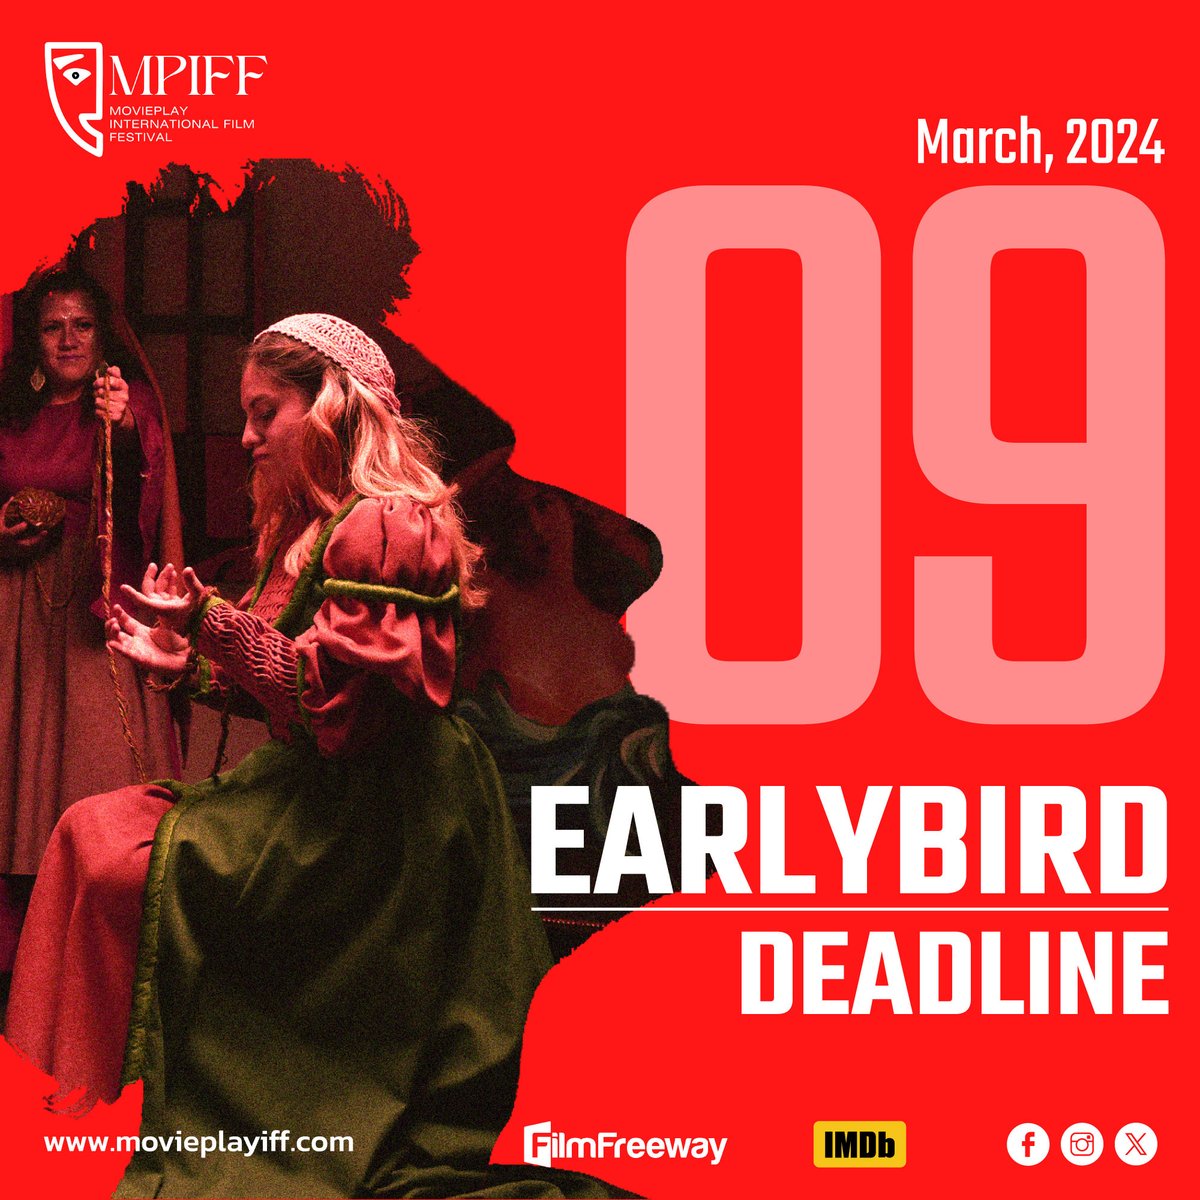 1 Day to Earlybird Deadline!! 

Earlybird Deadline - 09 March, 2024 

Entries through FilmFreeway: filmfreeway.com/MoviePlayInter… 

#movieplay #deadline #earlybirddeadline #movieplayiff